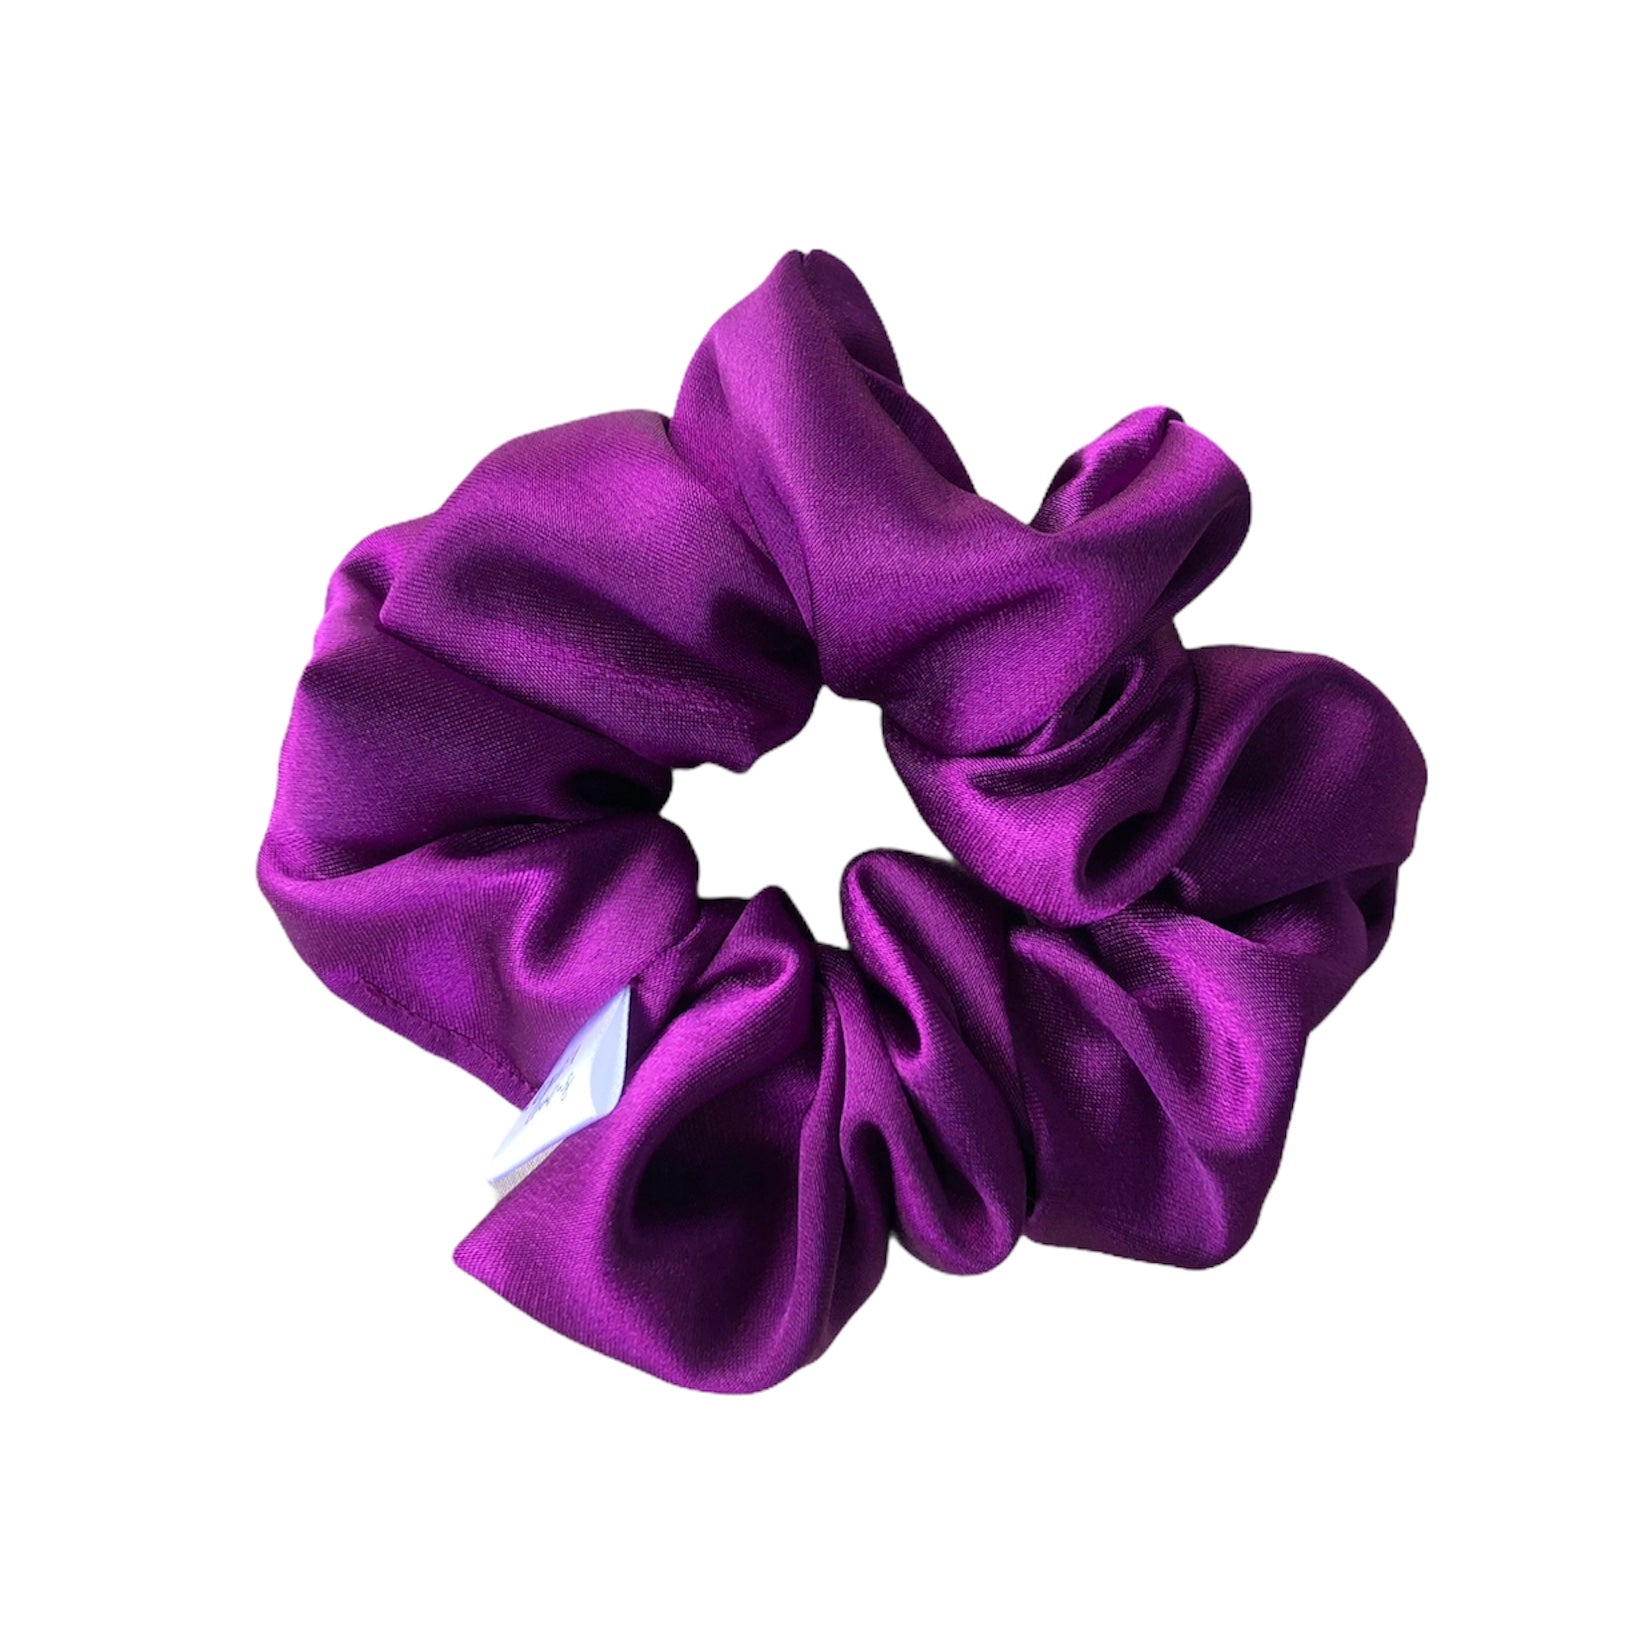 Regular Violet Scrunchie. An average sized amethyst violet satin scrunchie. 